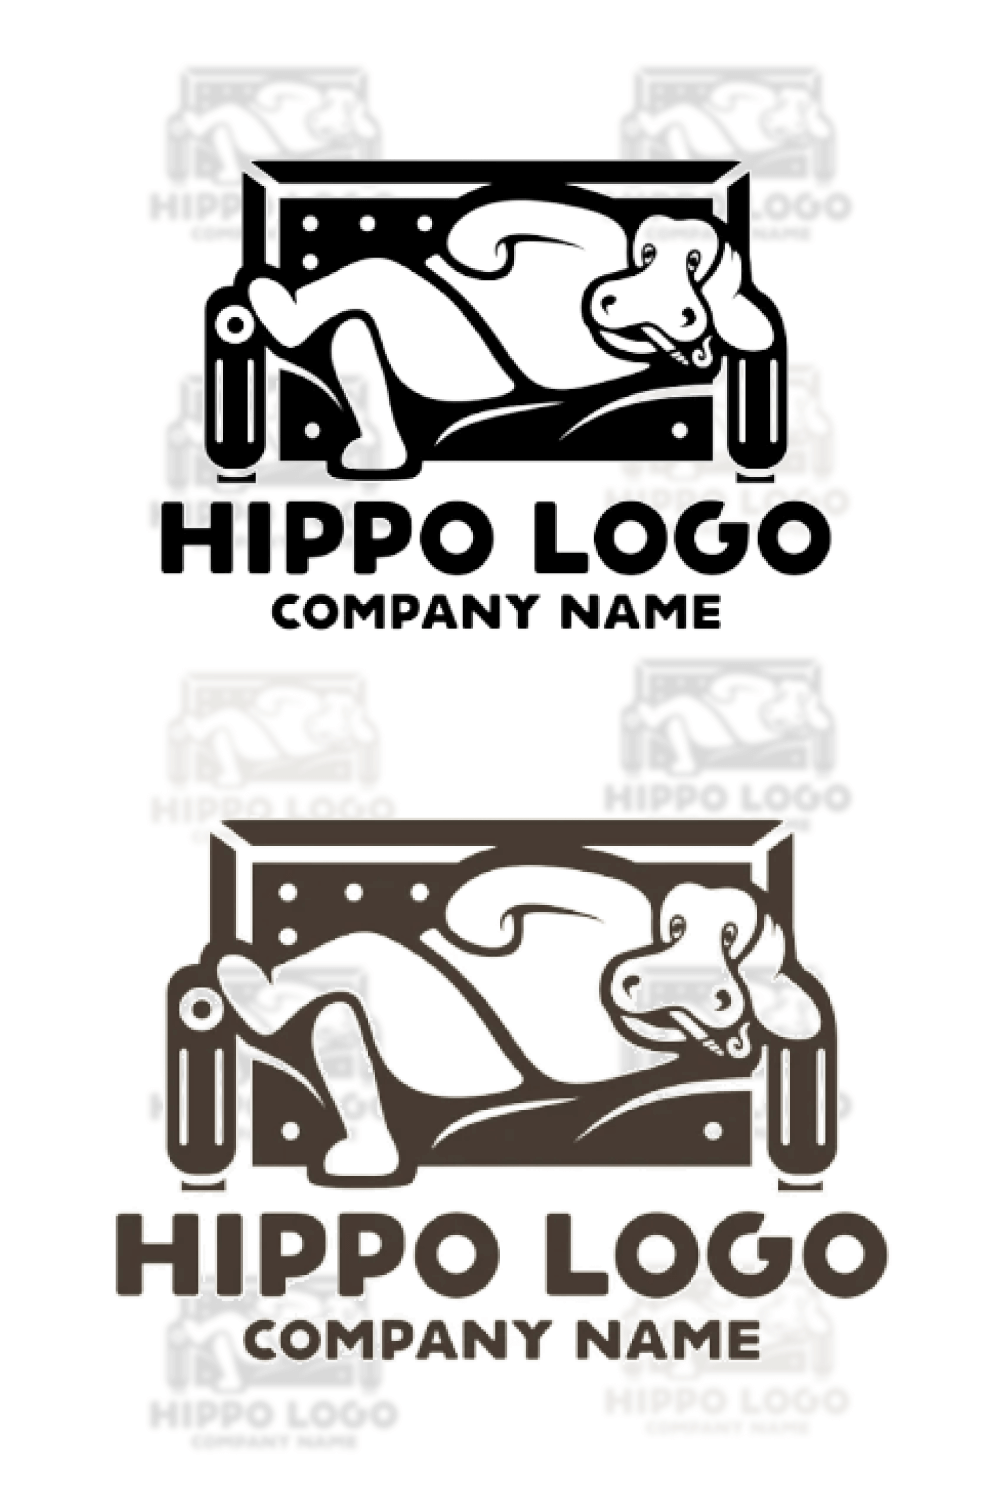 Hippo purpule circle logo.